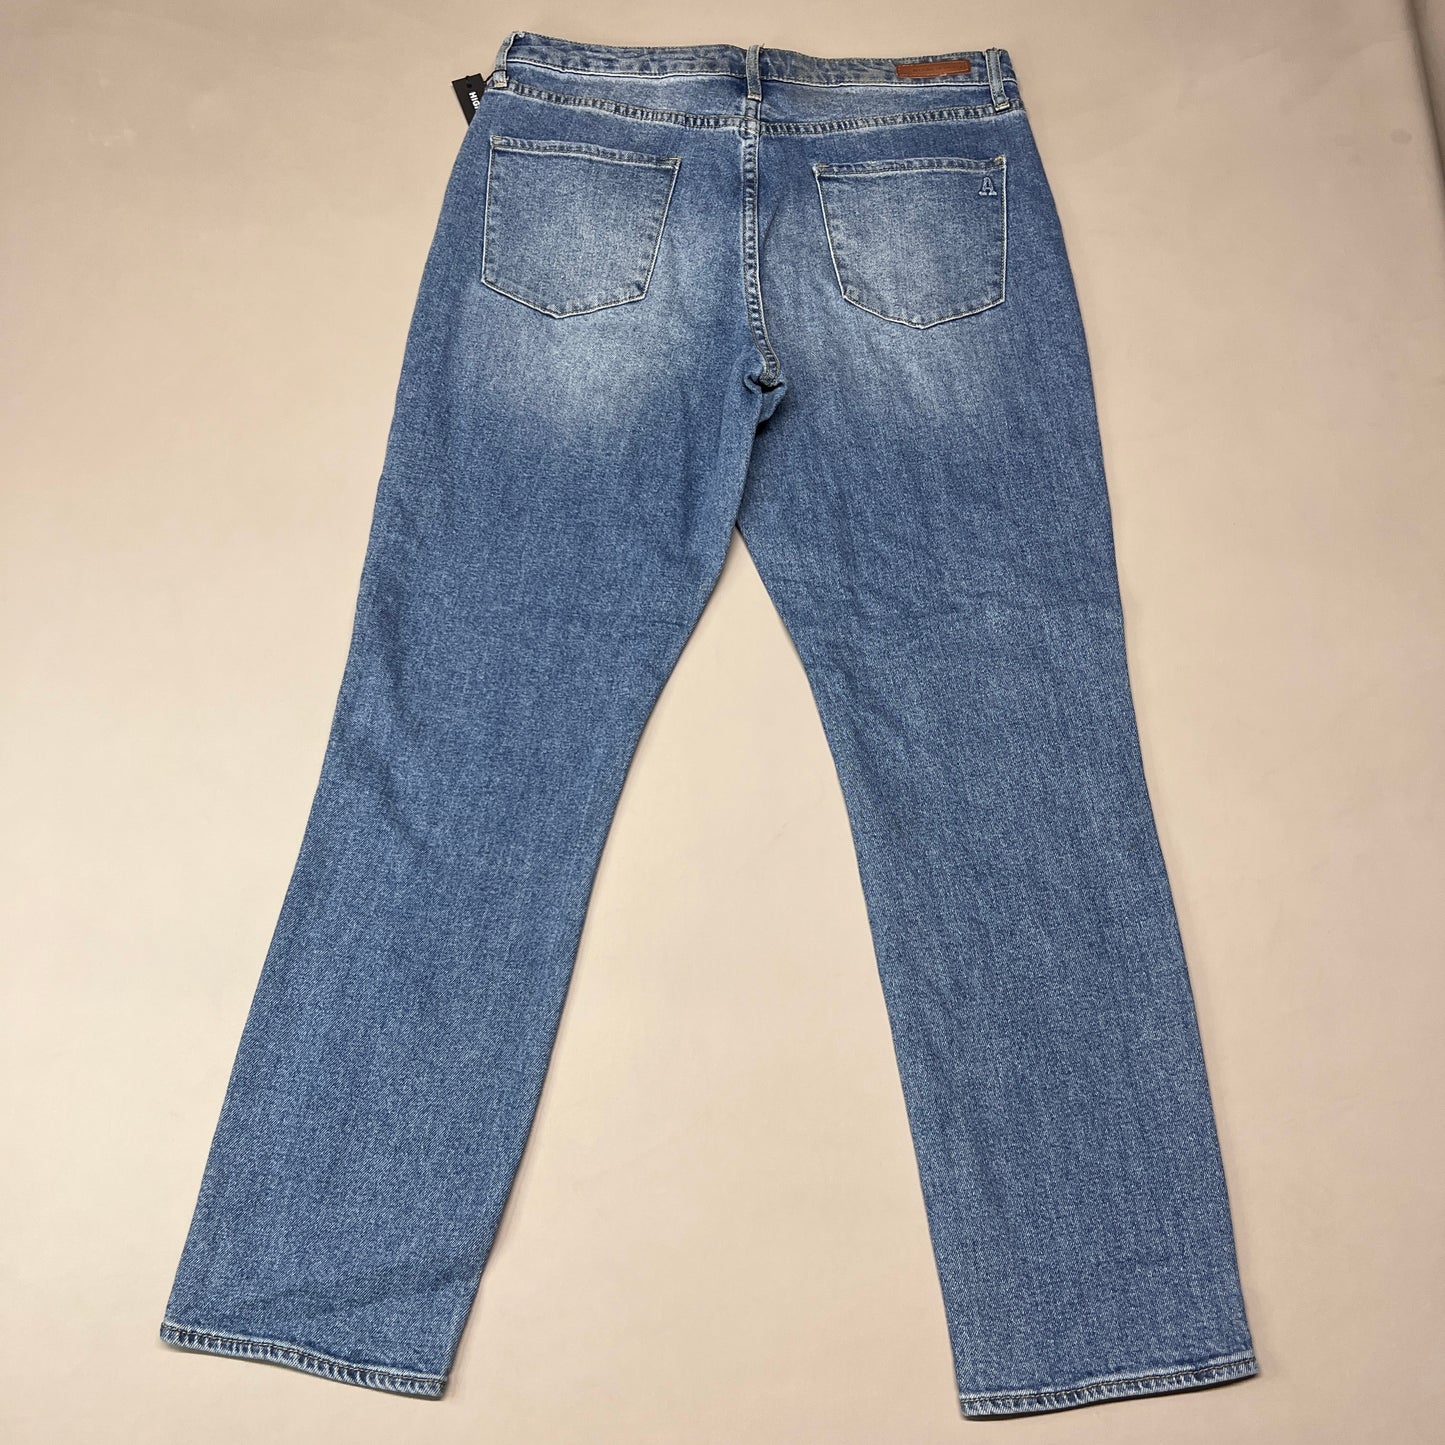 ARTICLES OF SOCIETY OMAO High Rise Denim Jeans Women's Sz 30 Blue 4009TQ3-716 (New)